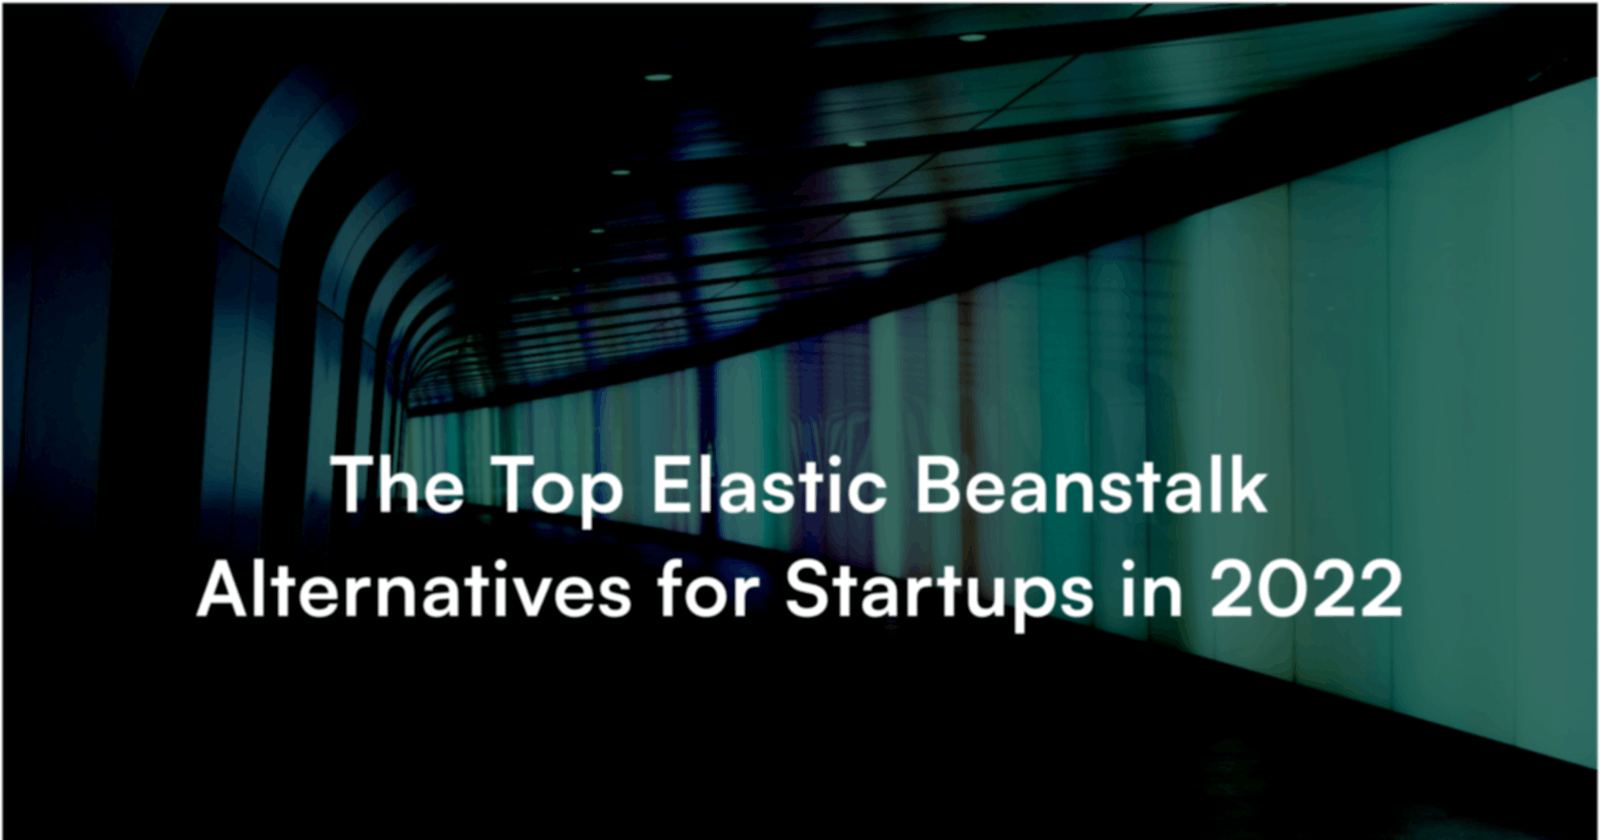 The Top Elastic Beanstalk Alternatives for Startups in 2022